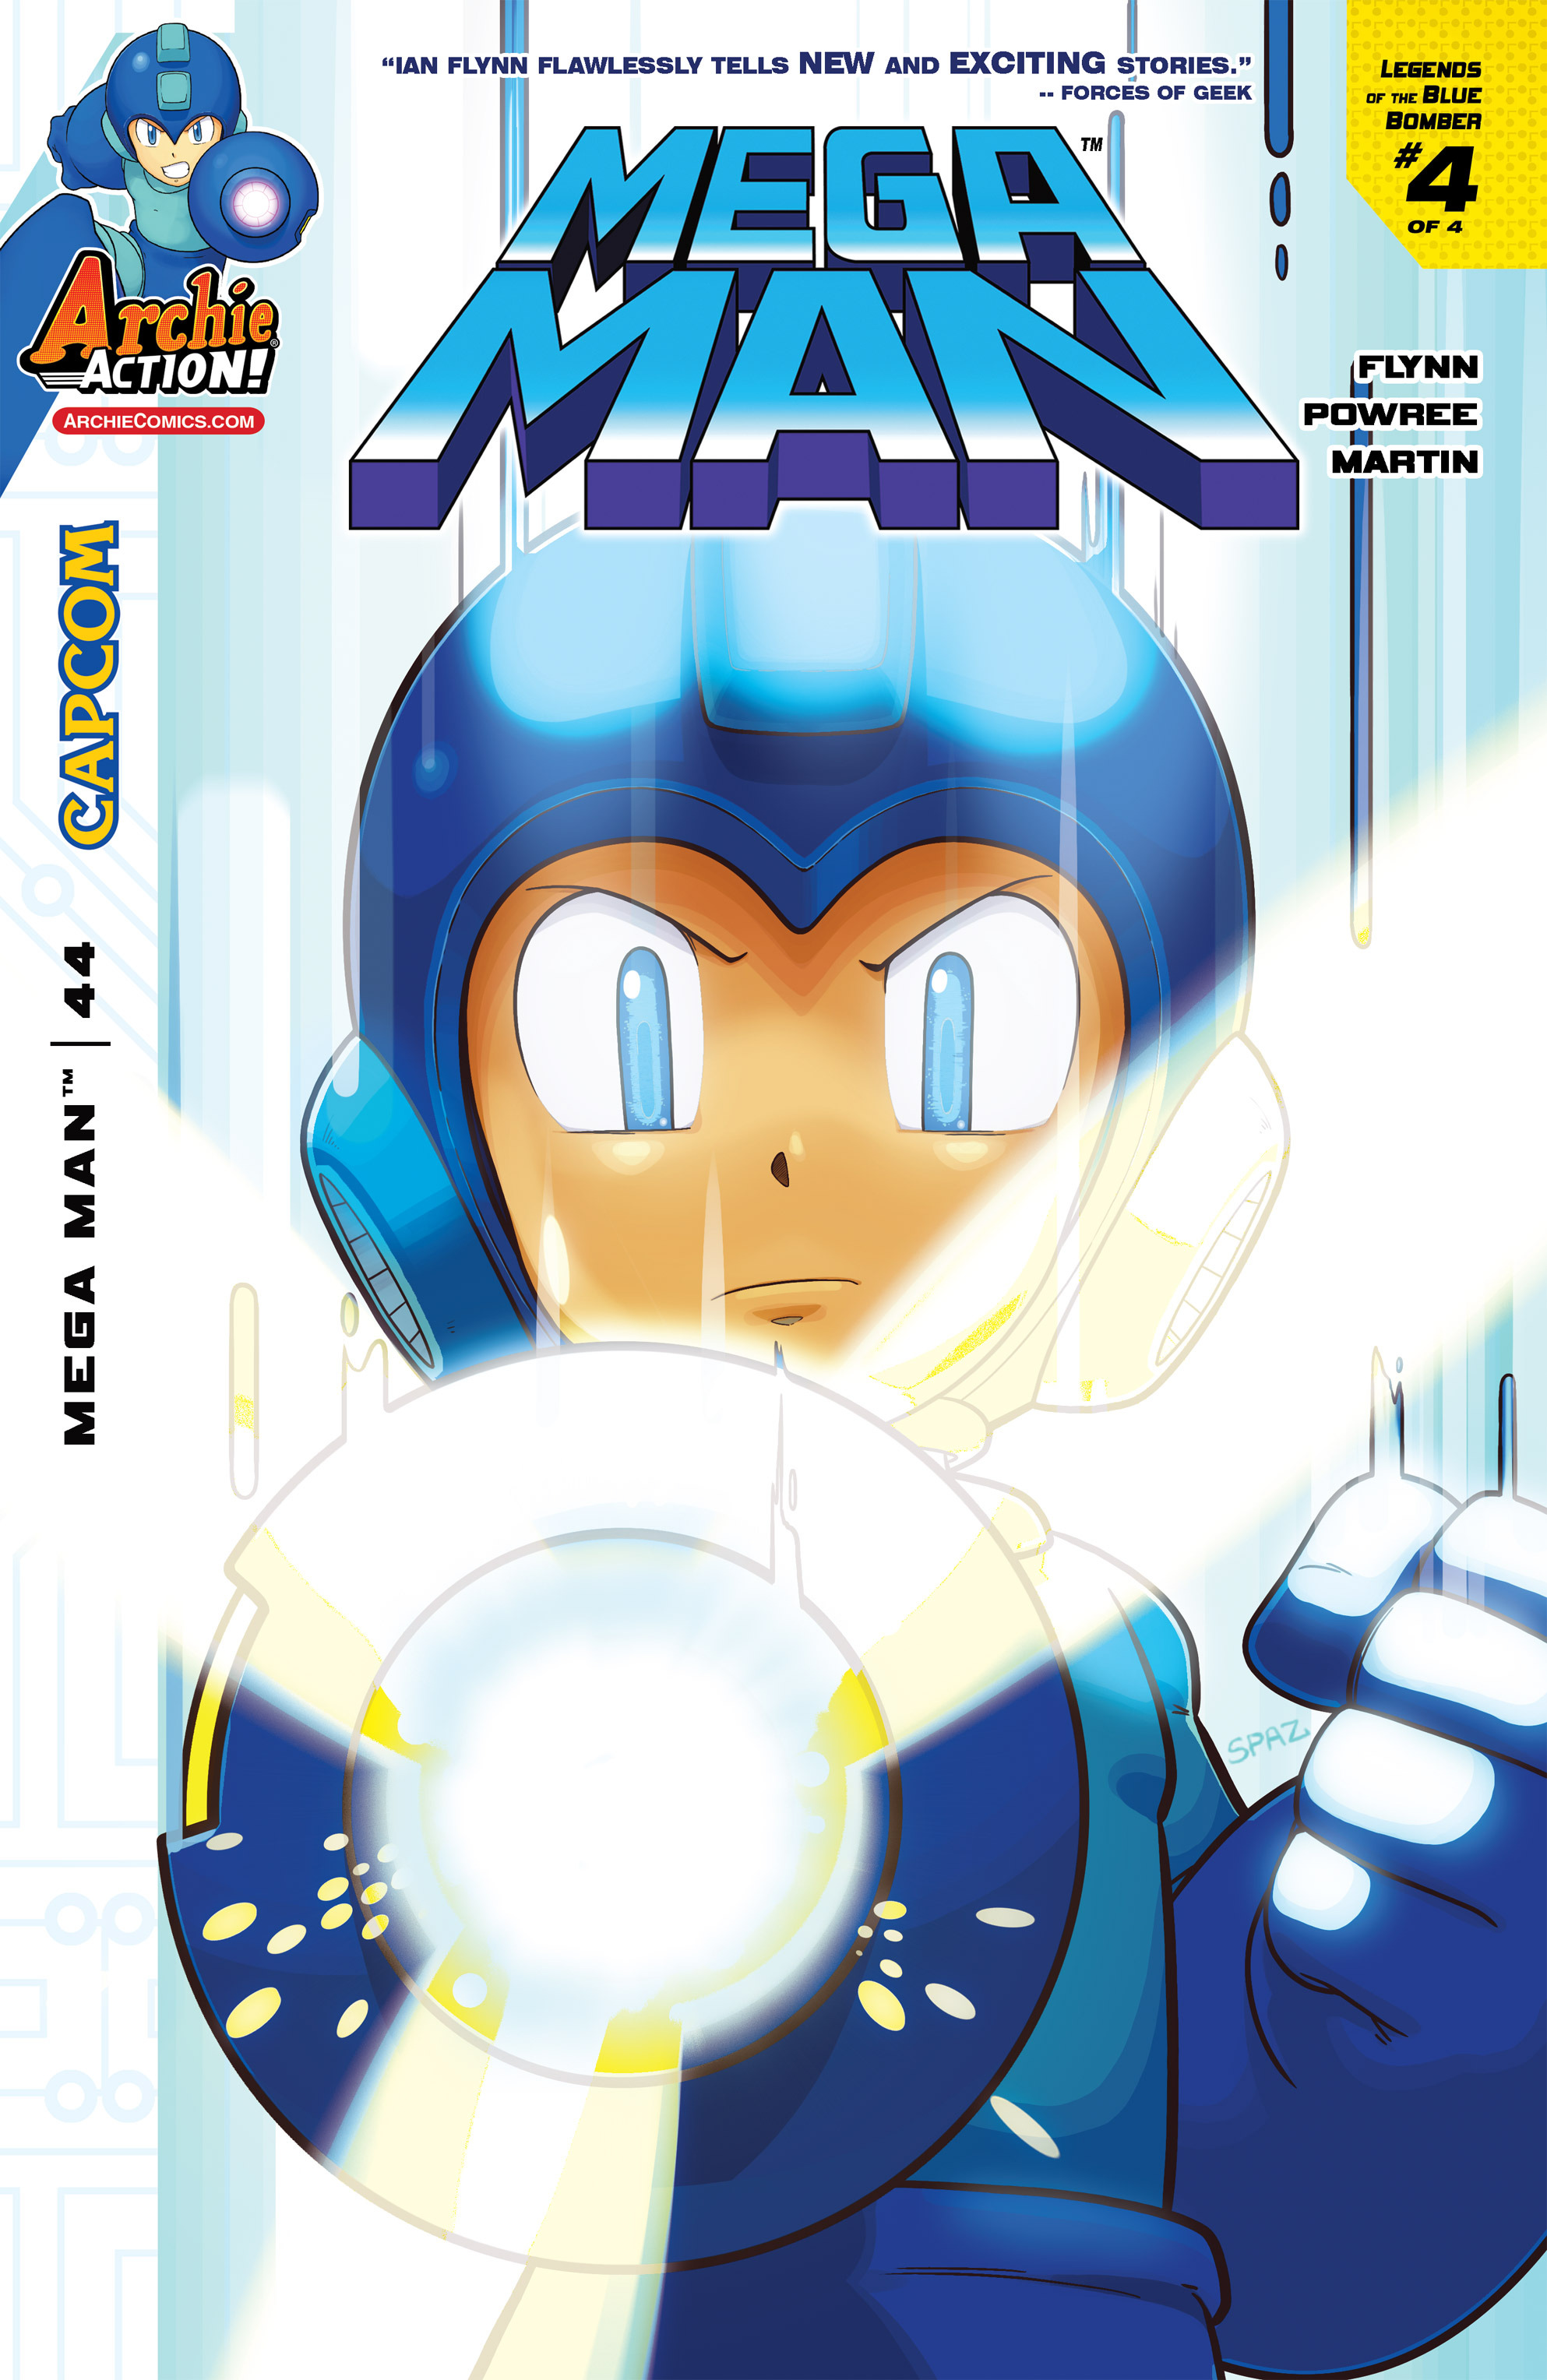 Mega Man Issue 44 Archie Comics Mmkb Fandom Powered By Wikia 